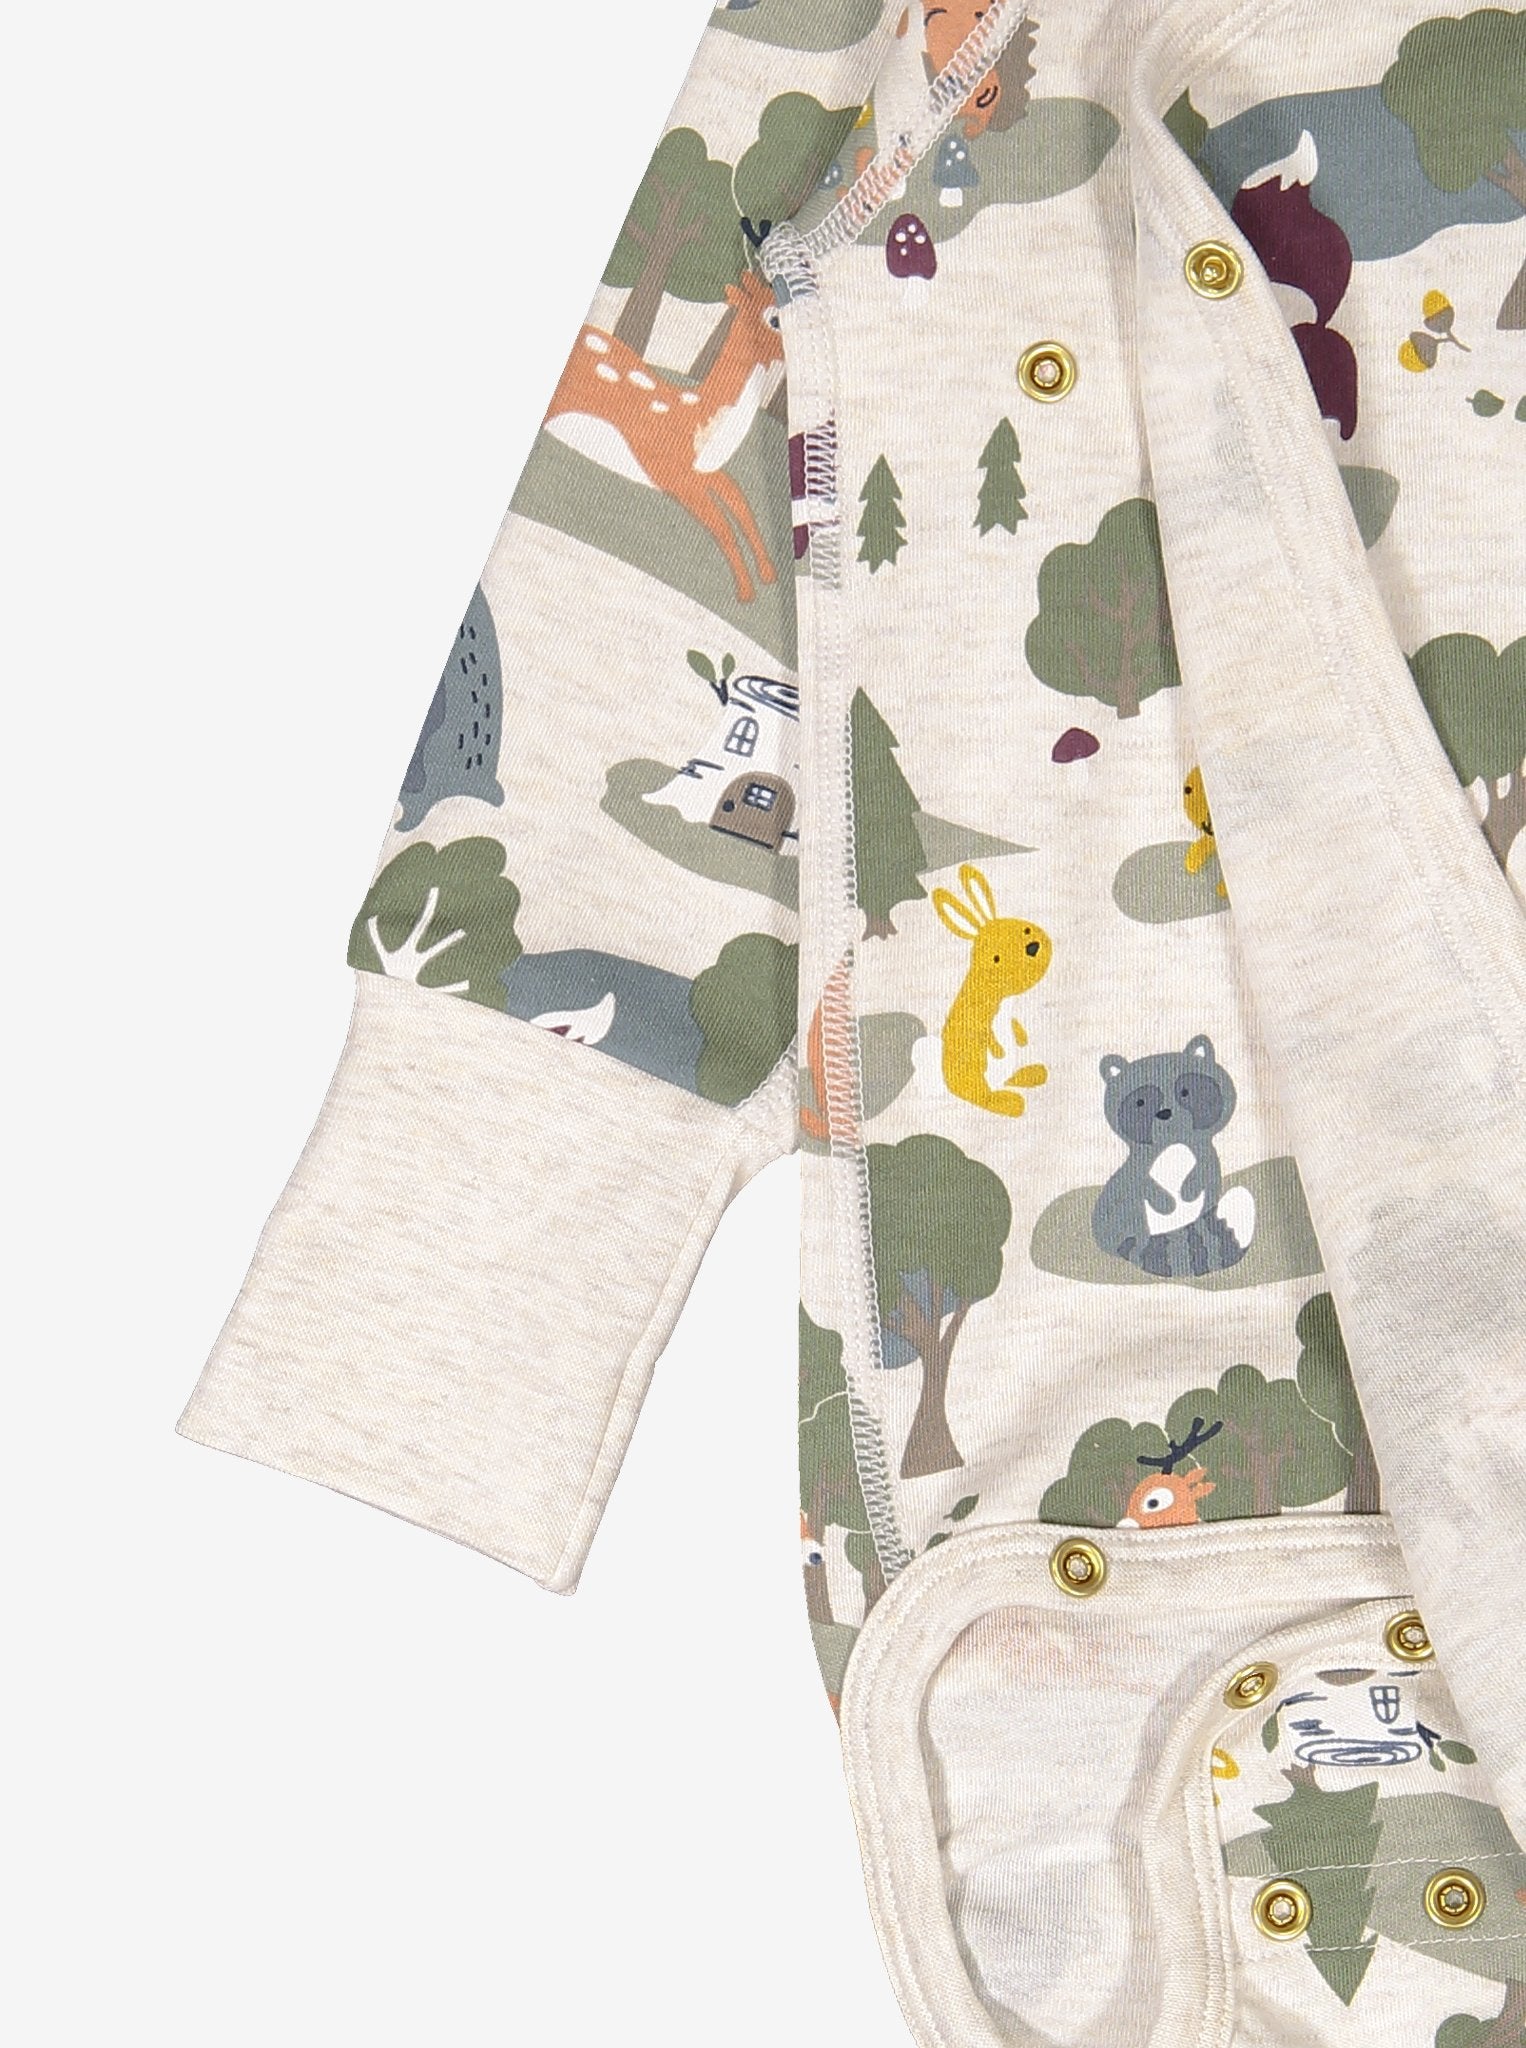 Unisex Animal Print Babygrow, Scandinavian Baby Clothes | Polarn O. Pyret UK